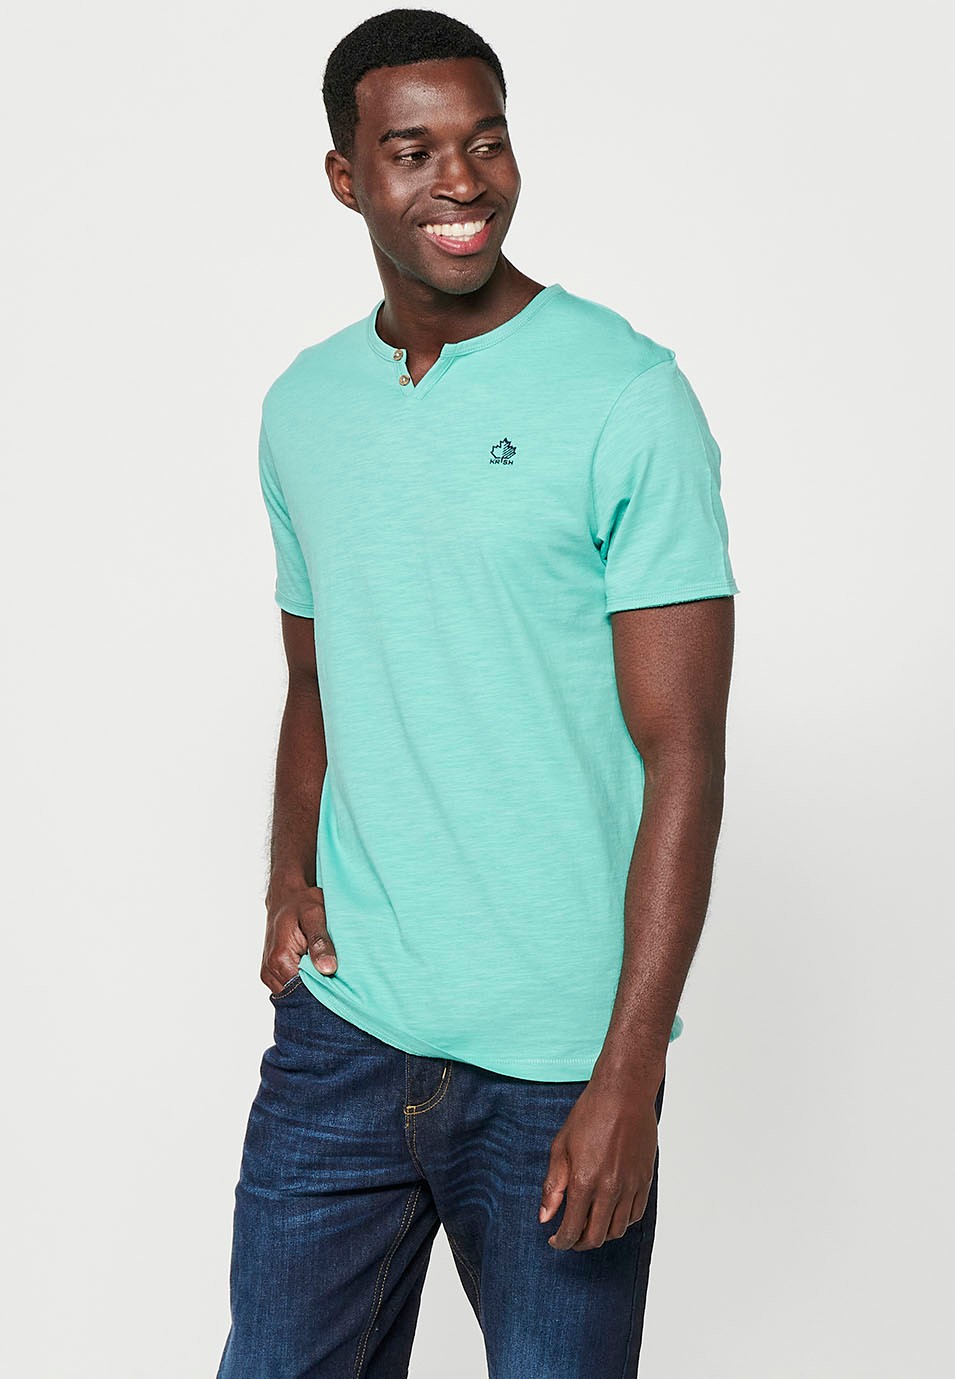 Camiseta básica de manga corta de algodón, cuello V con boton, color menta para hombre